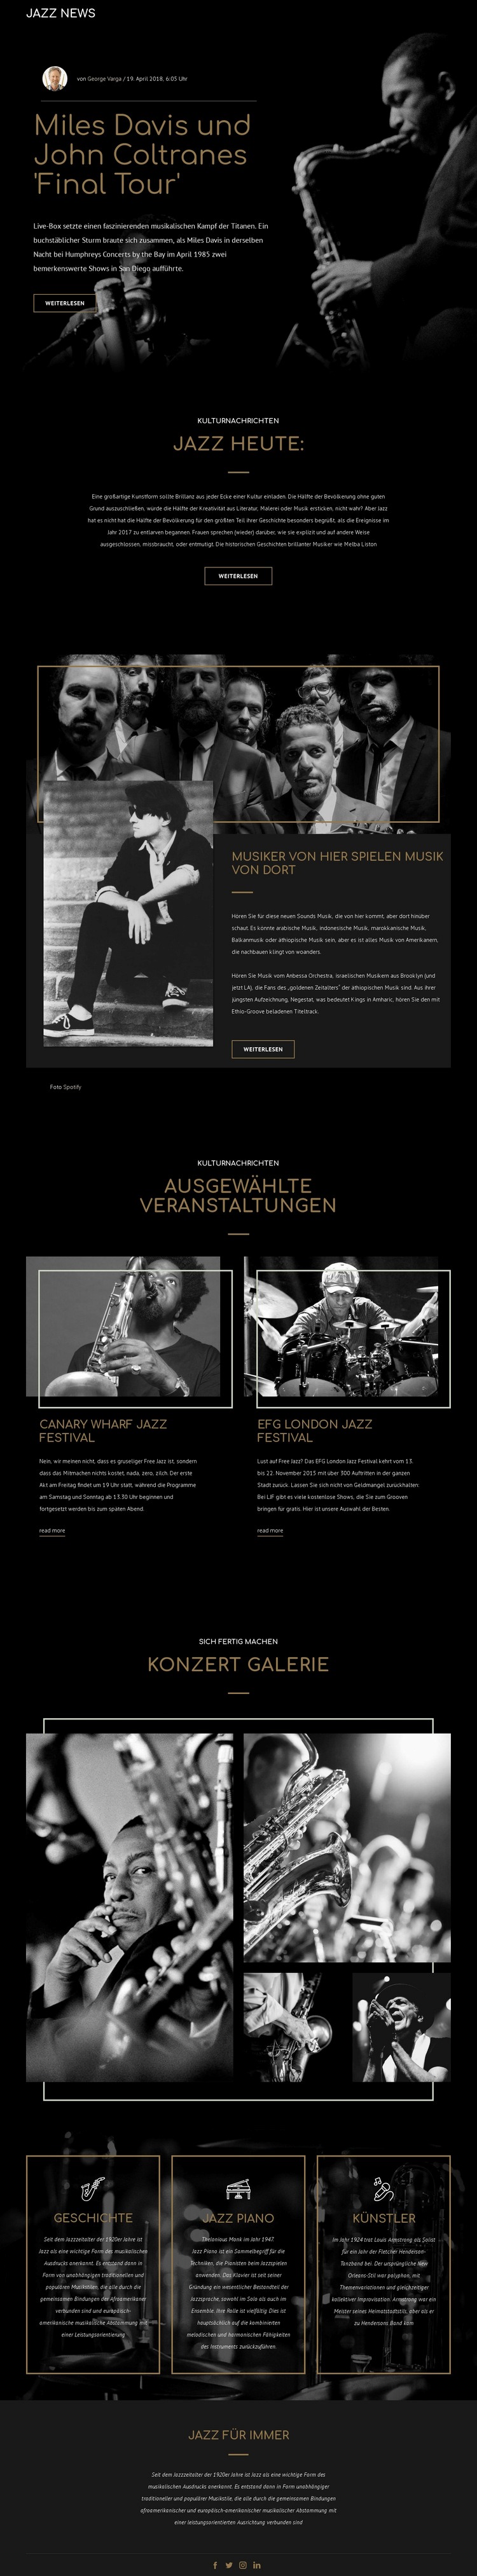 Legengs der Jazzmusik Website-Modell